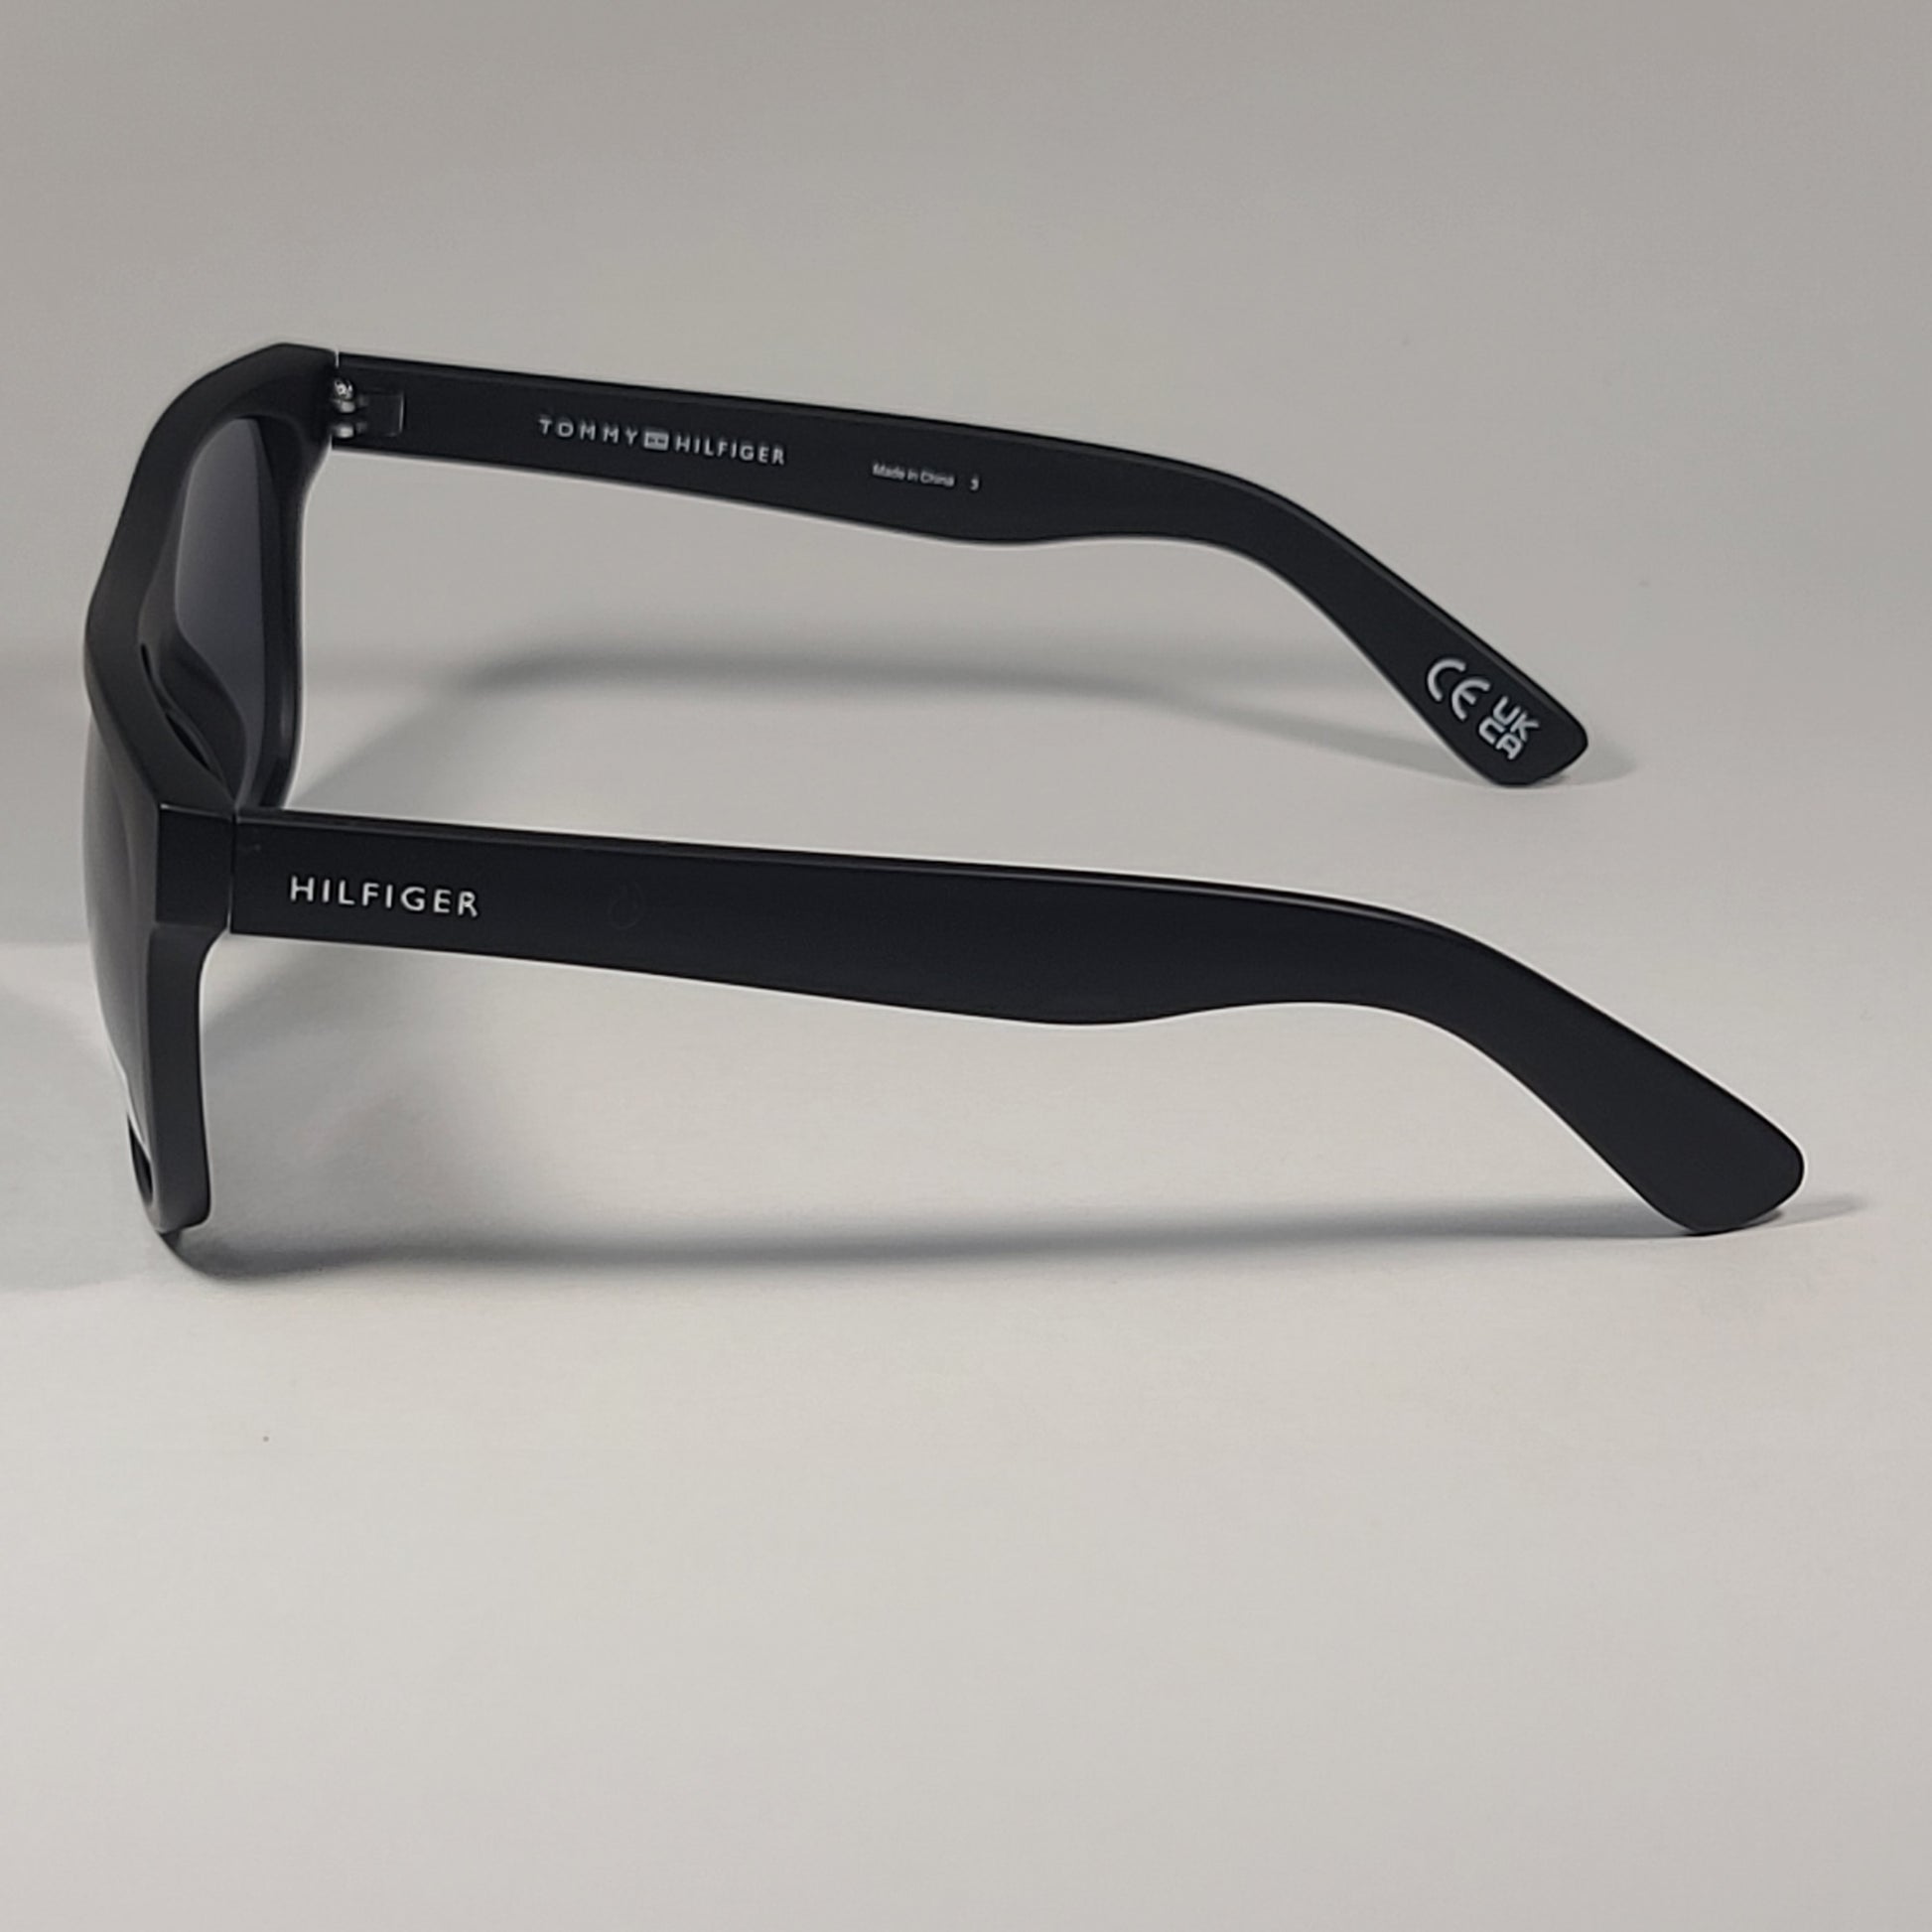 Tommy Hilfiger Drake MP OM611 Square Sunglasses Matte Black Gray Tinted Lens - Sunglasses